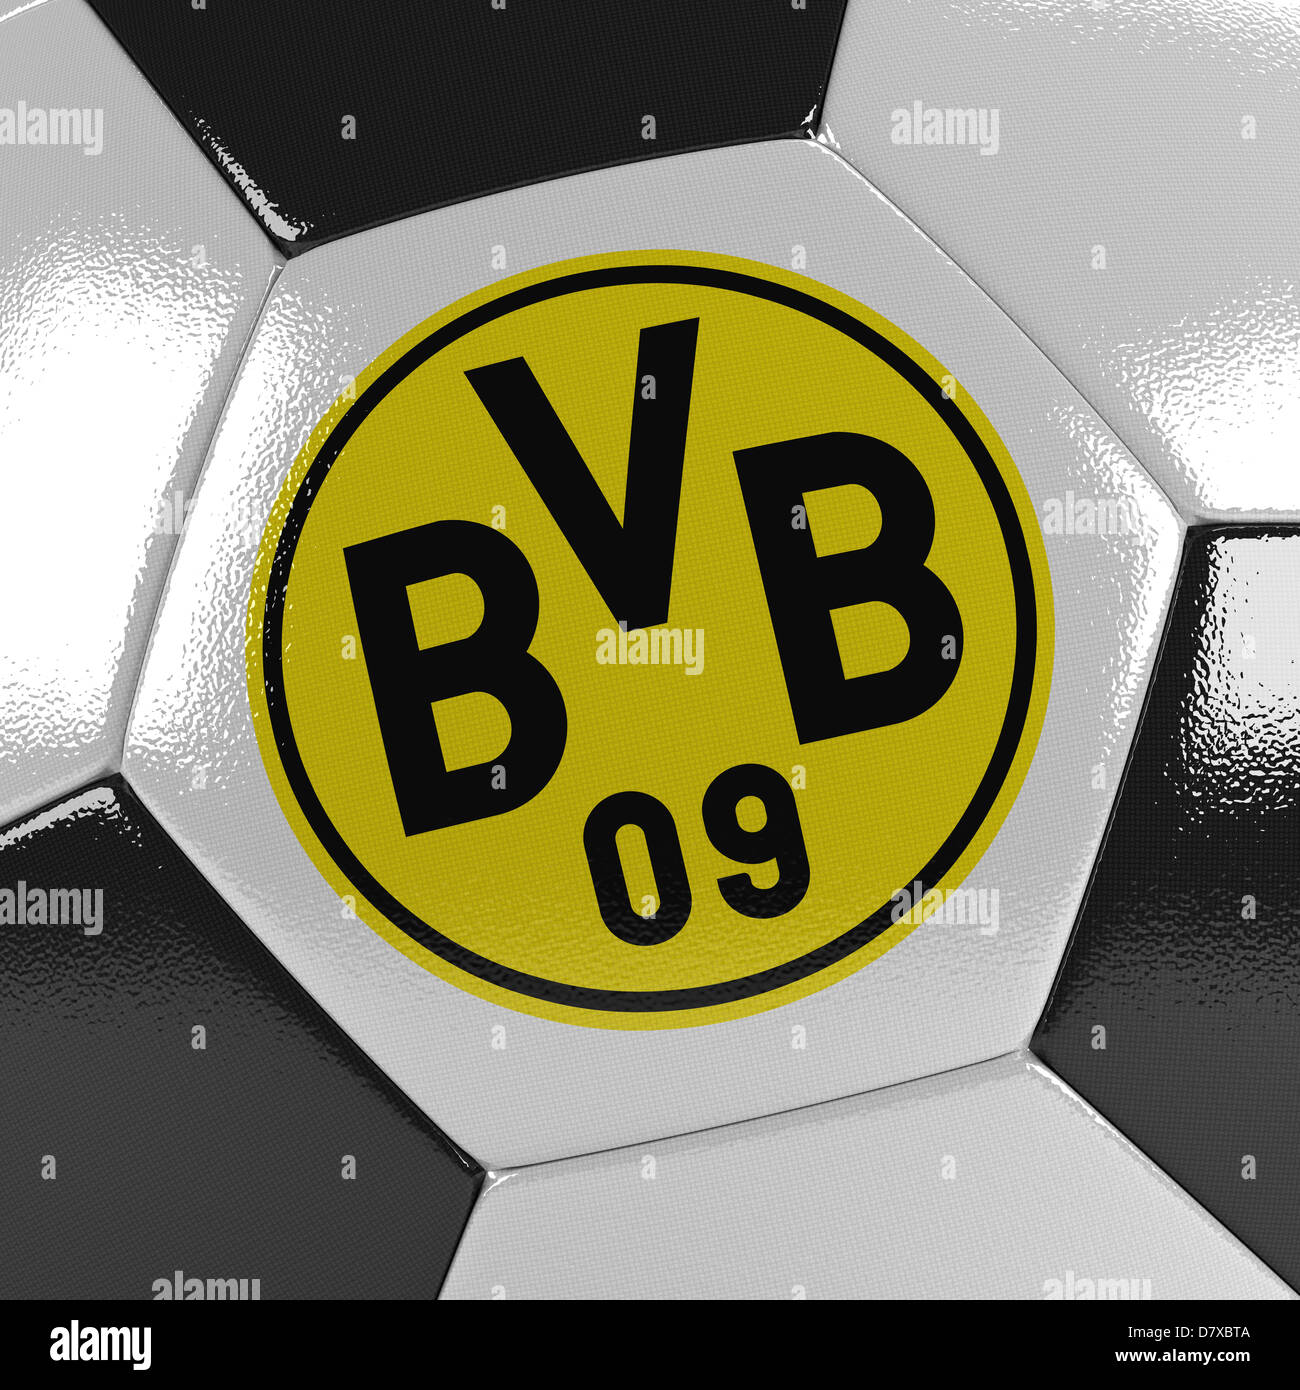 BV 09 Borussia Dortmund soccer ball Stock Photo - Alamy